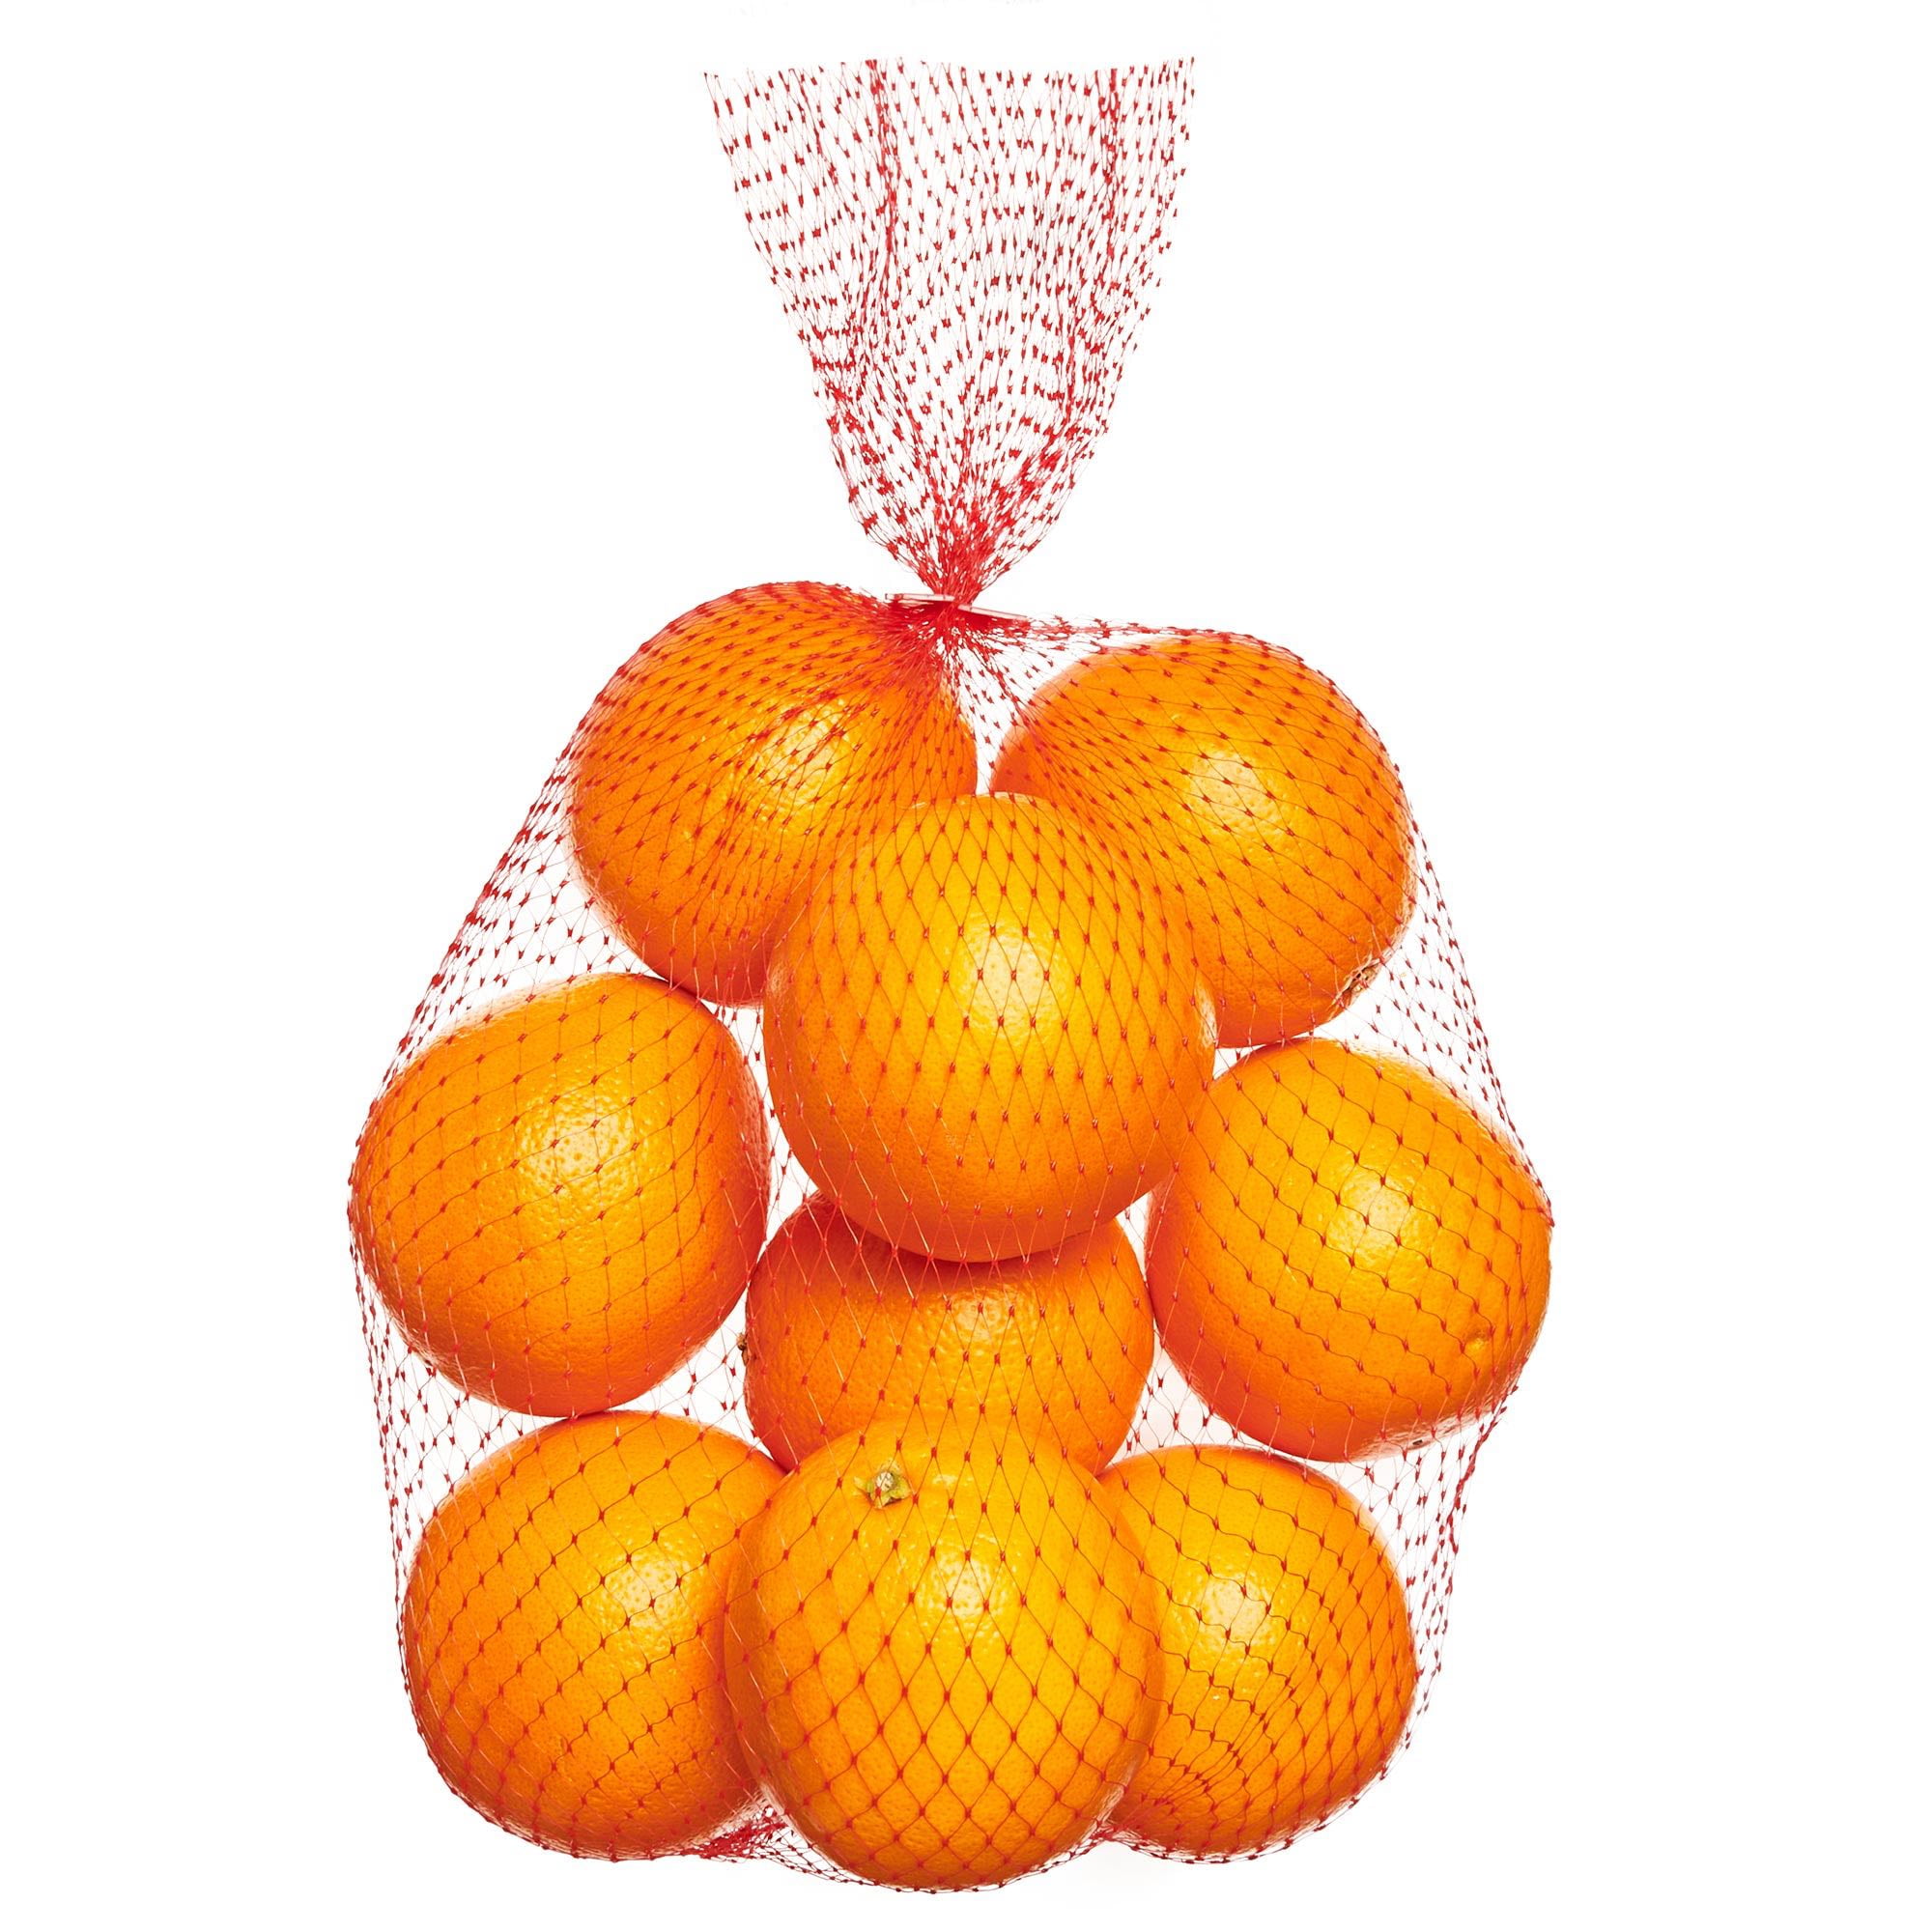 Fresh Navel Oranges, 4 lb Bag